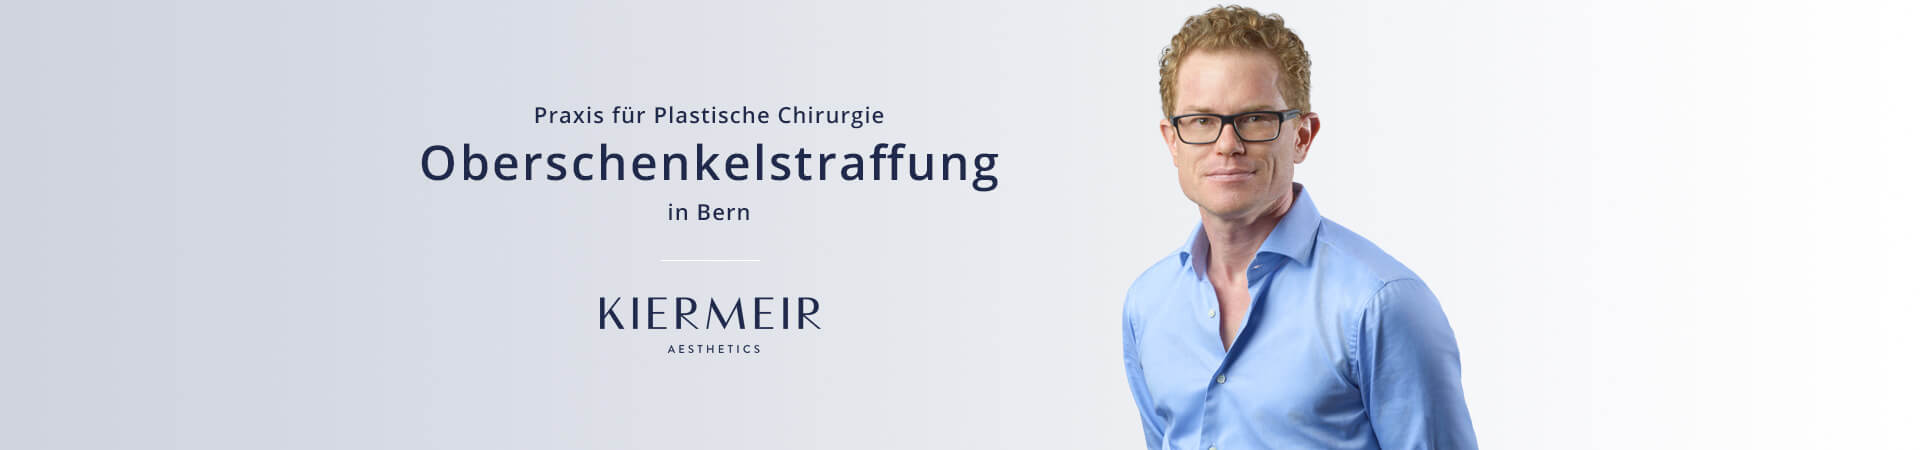 Oberschenkelstraffung in Bern - Dr. David Kiermeir 